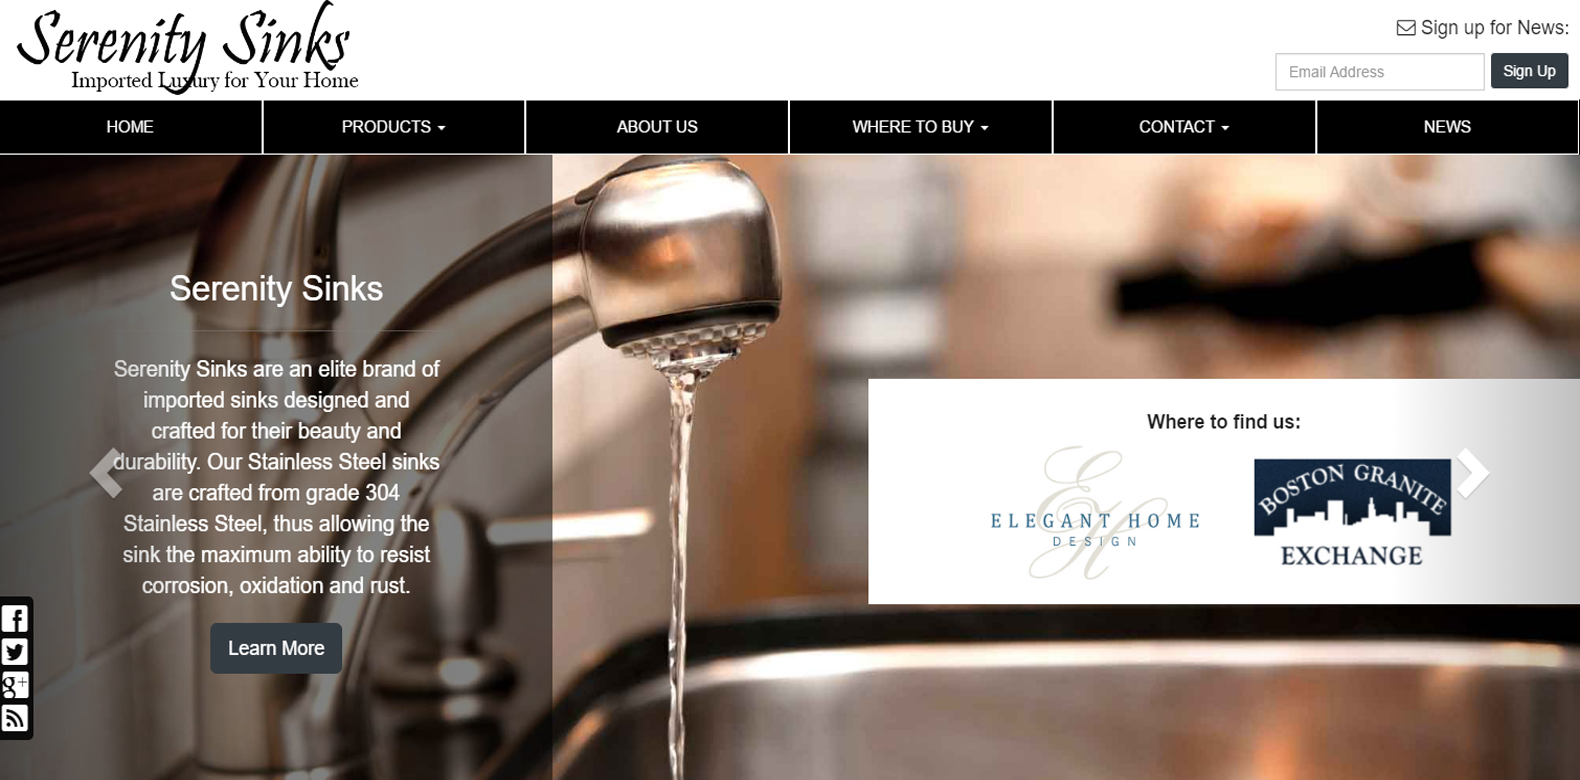 
New Website Launch: Serenity Sink